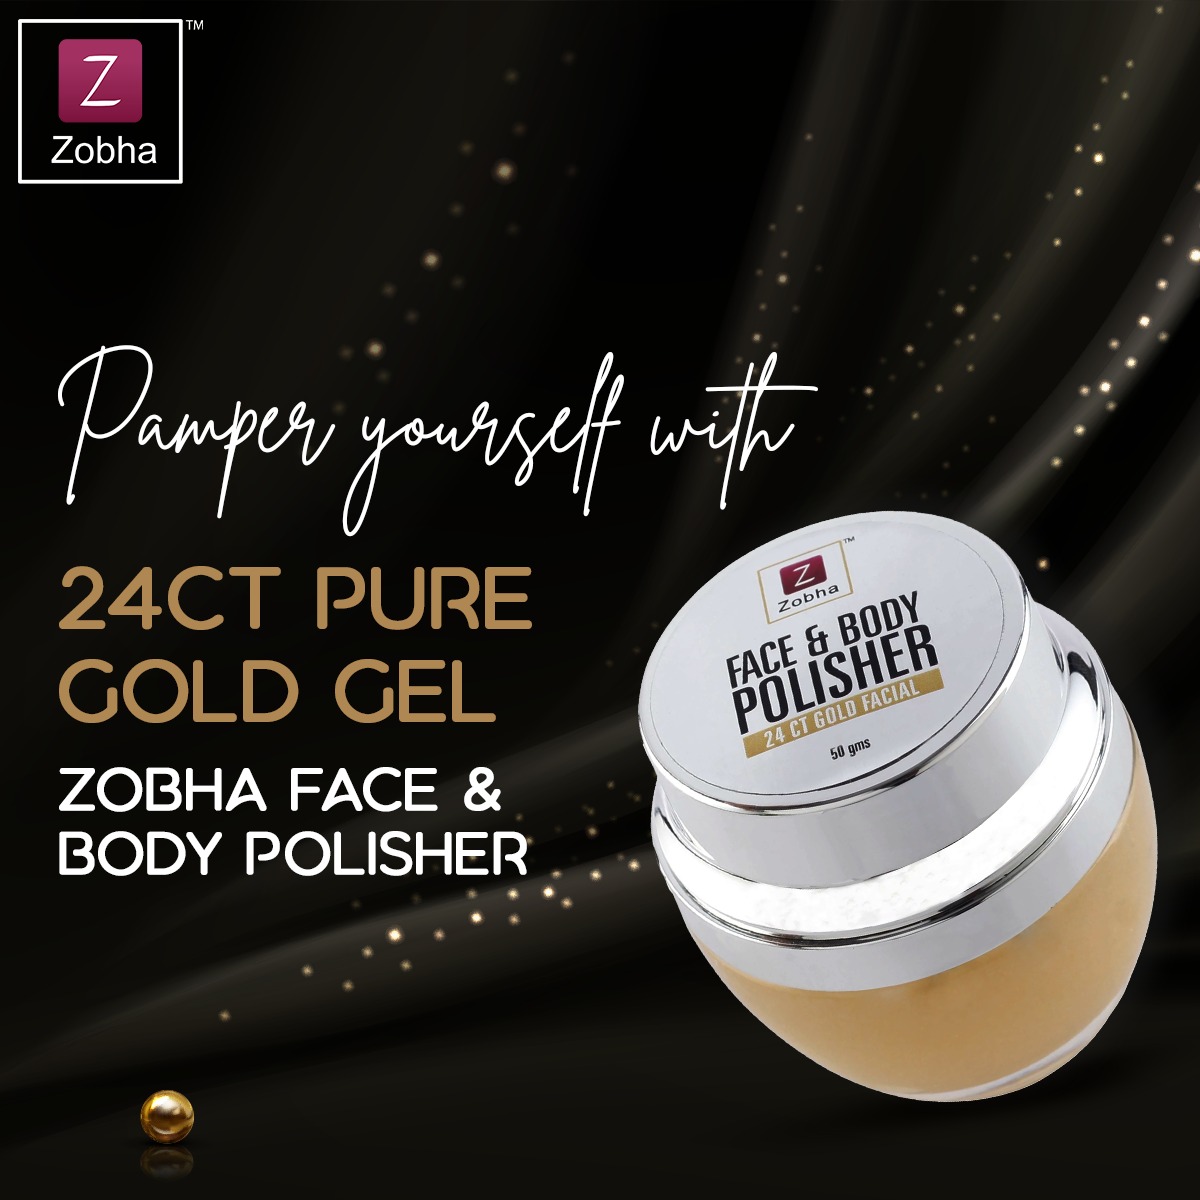 Get radiant shimmery glow instantly with optimum blood circulation with Zobha's 24CT Face & Body Polisher.
Buy Now: https://t.co/pBKQ9UzB4s

#Zobha #FreshSkin #Skincare #SkinLove #SkincareTip #GoodSkin #GlowingSkin #24CT #GoldGet #BodyPolish https://t.co/58bmXnvbkA